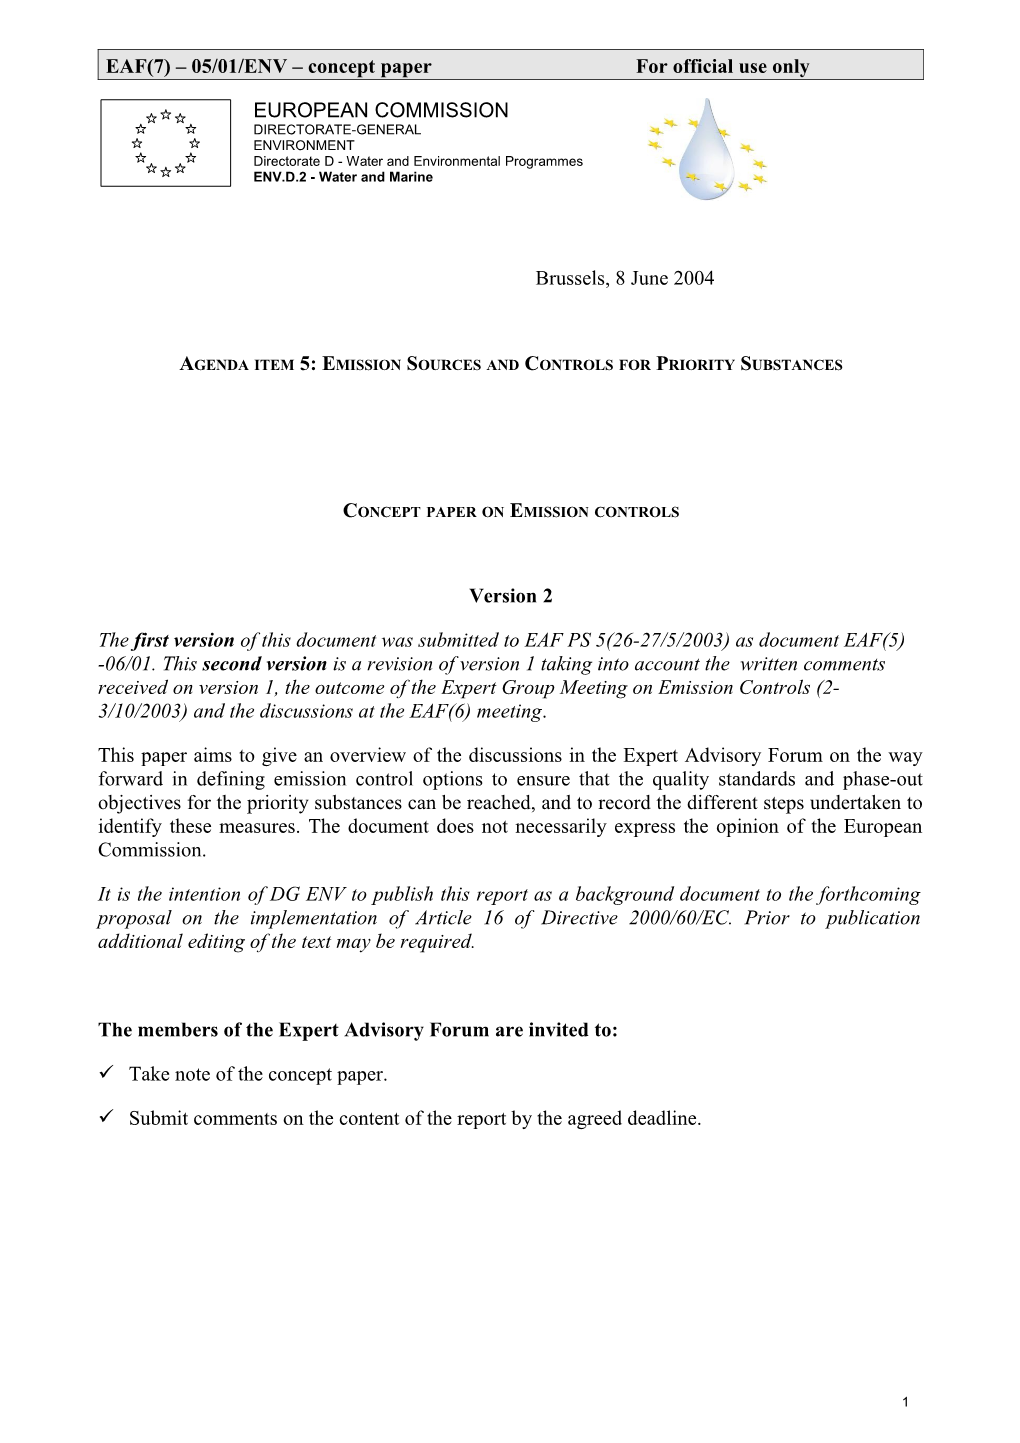 EAF(7) 05/01/ENV Concept Paper for Official Use Only